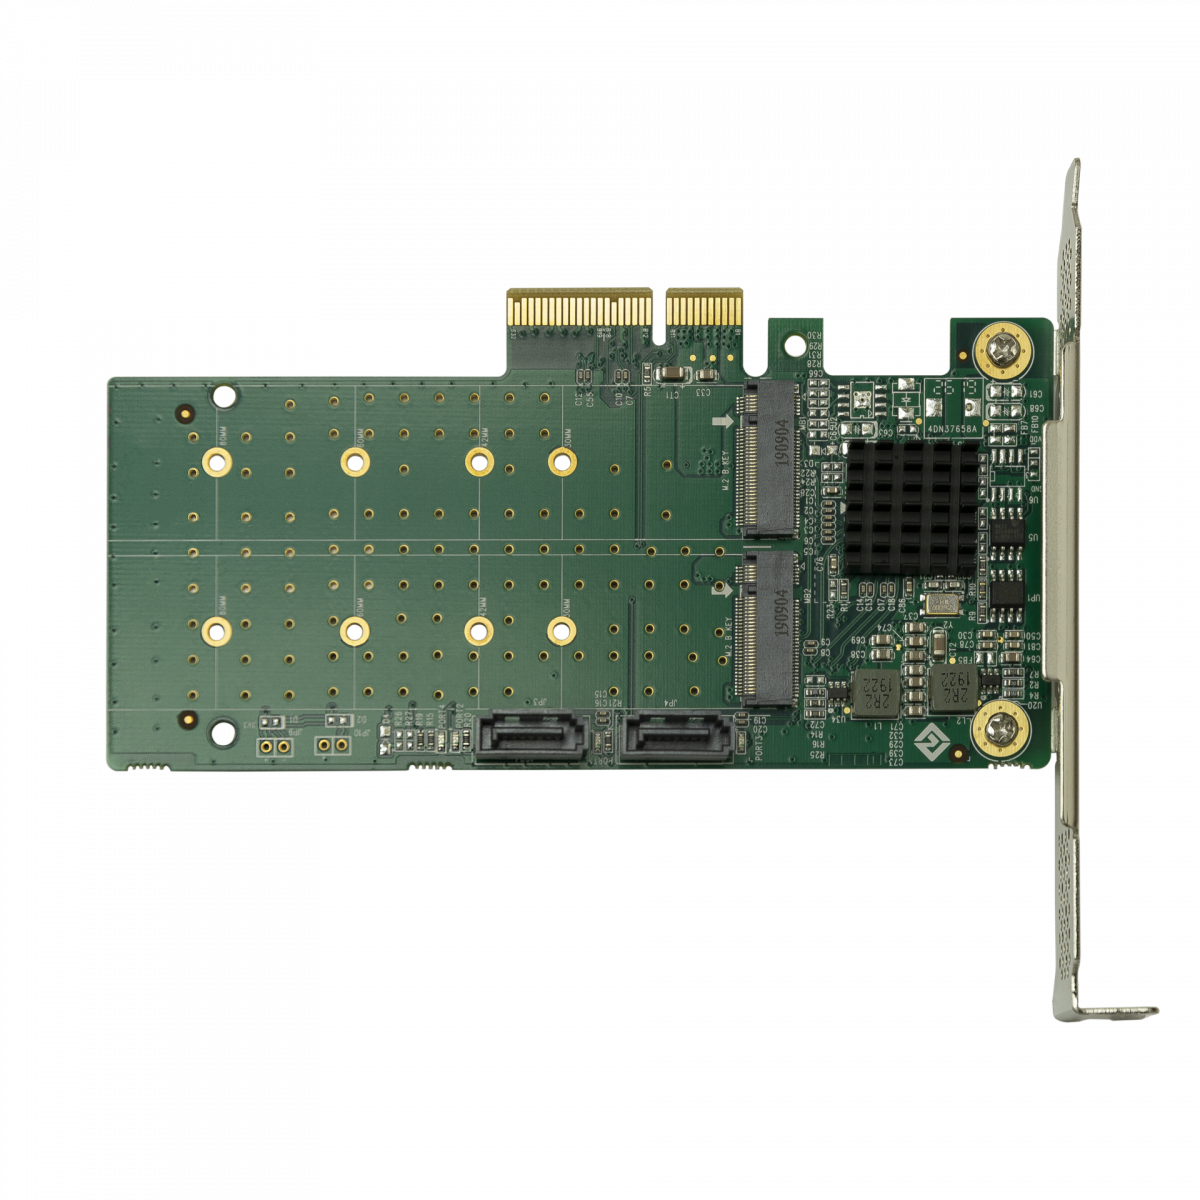 Переходной адаптер PCIe 2.0 x4 на 2xM.2 и 2xSATA, RAID 0,1